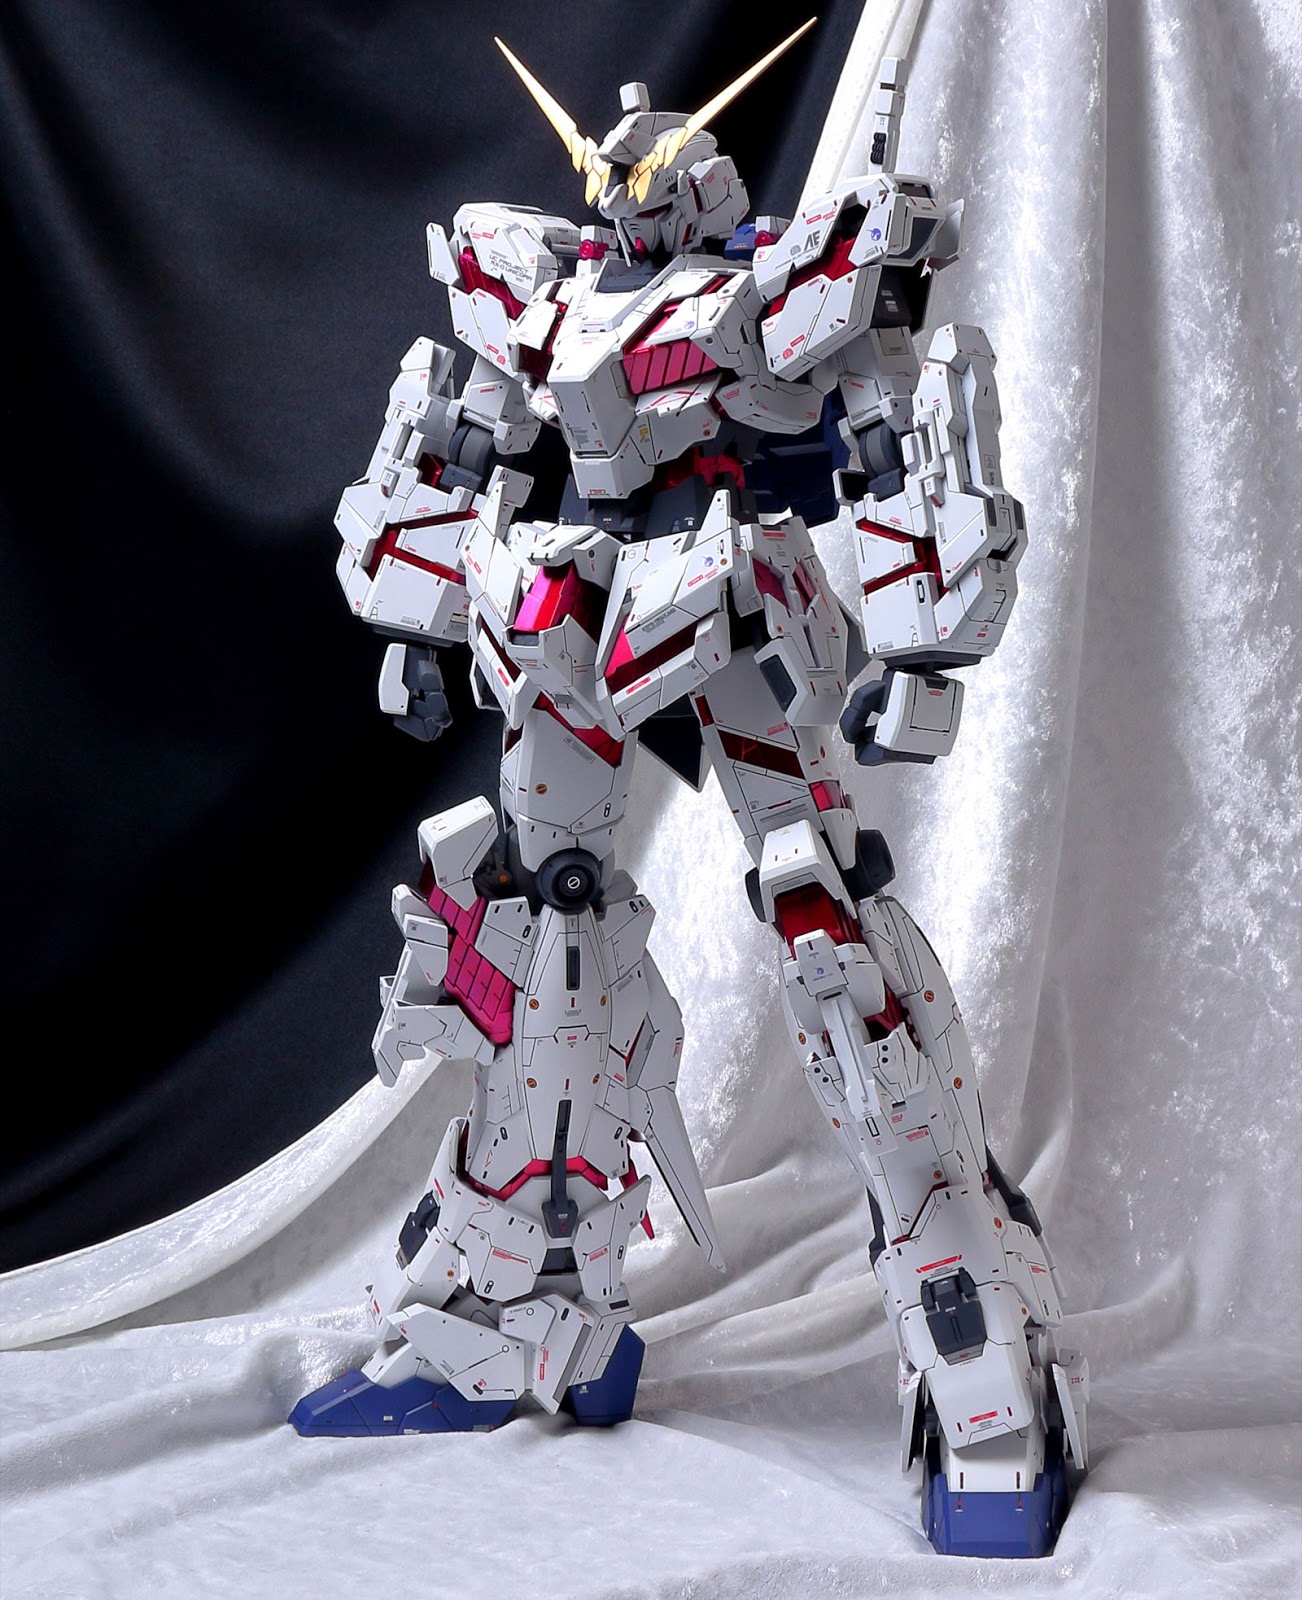 Custom Build Mega Size 1 48 Rx 0 Unicorn Gundam Destroy Mode Detailed Gundam Kits Collection News And Reviews